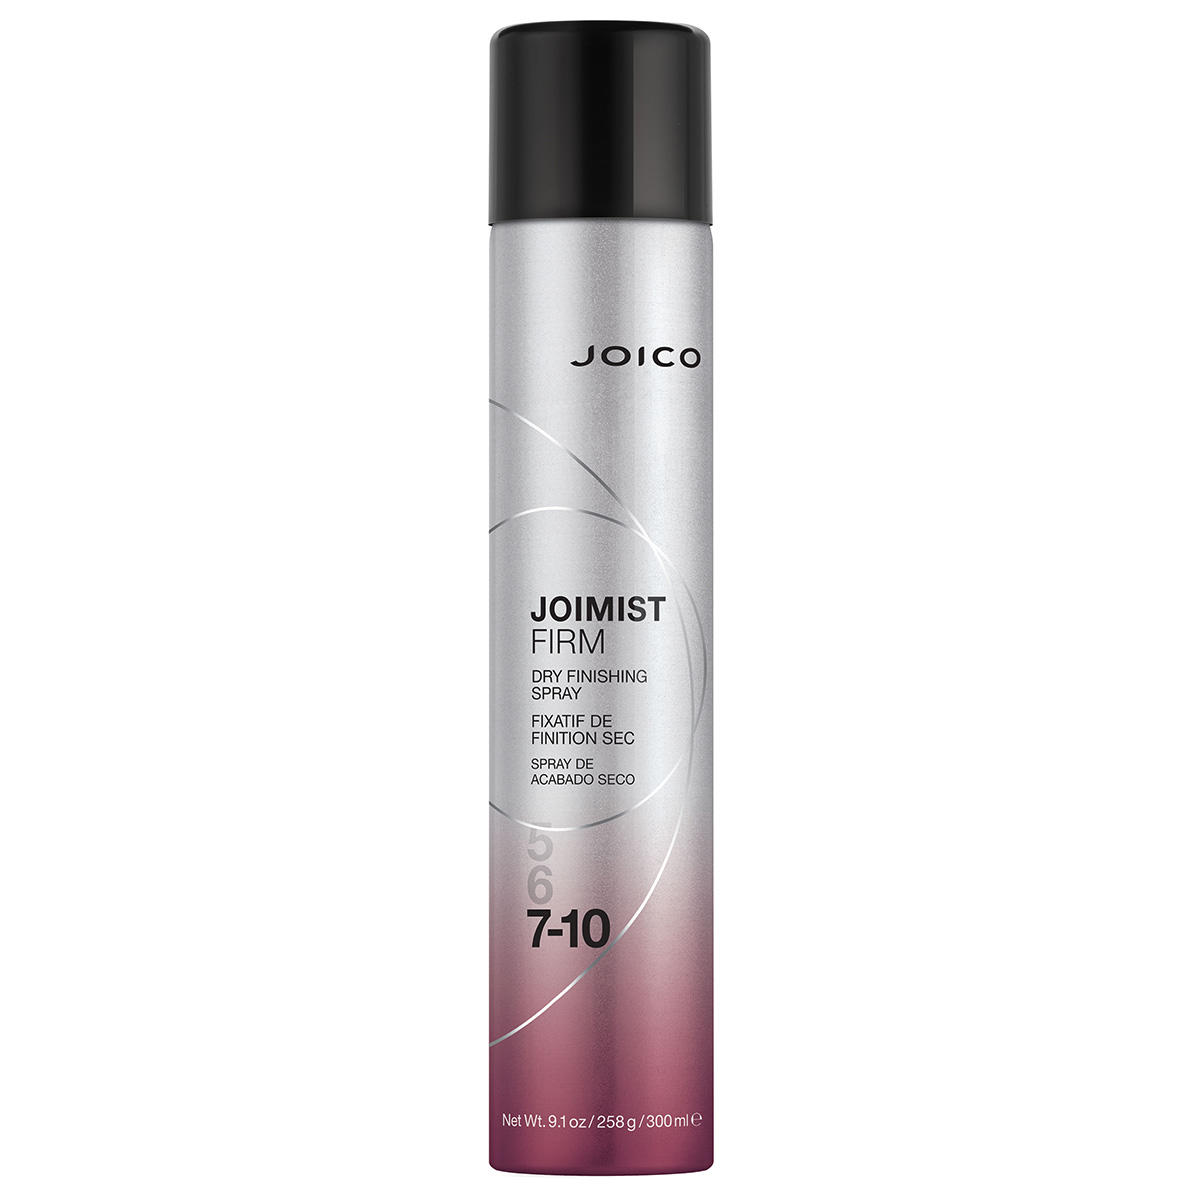 JOICO JoiMist Firm Protective Finishing Spray starker Halt 350 ml - 1